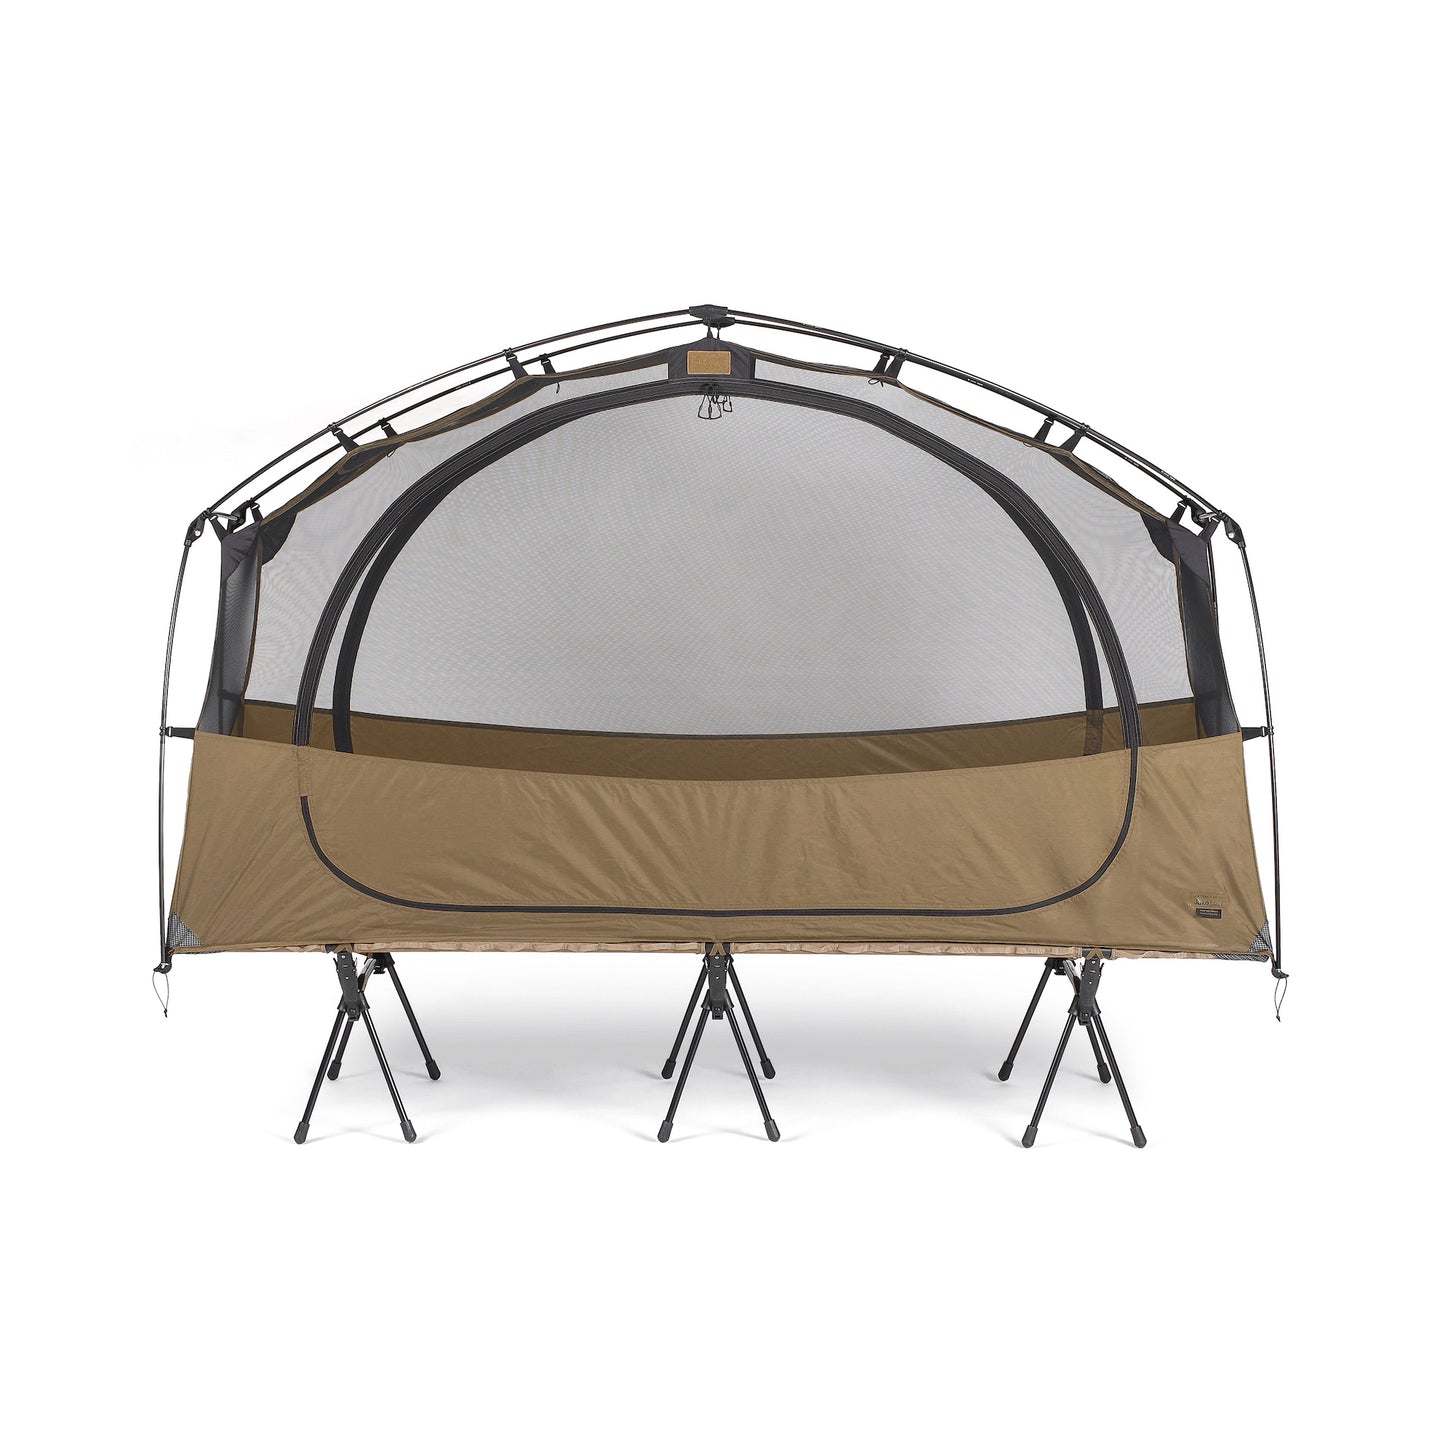 Tac. Cot Tent Solo Inner tent (mesh) - Coyote Tan